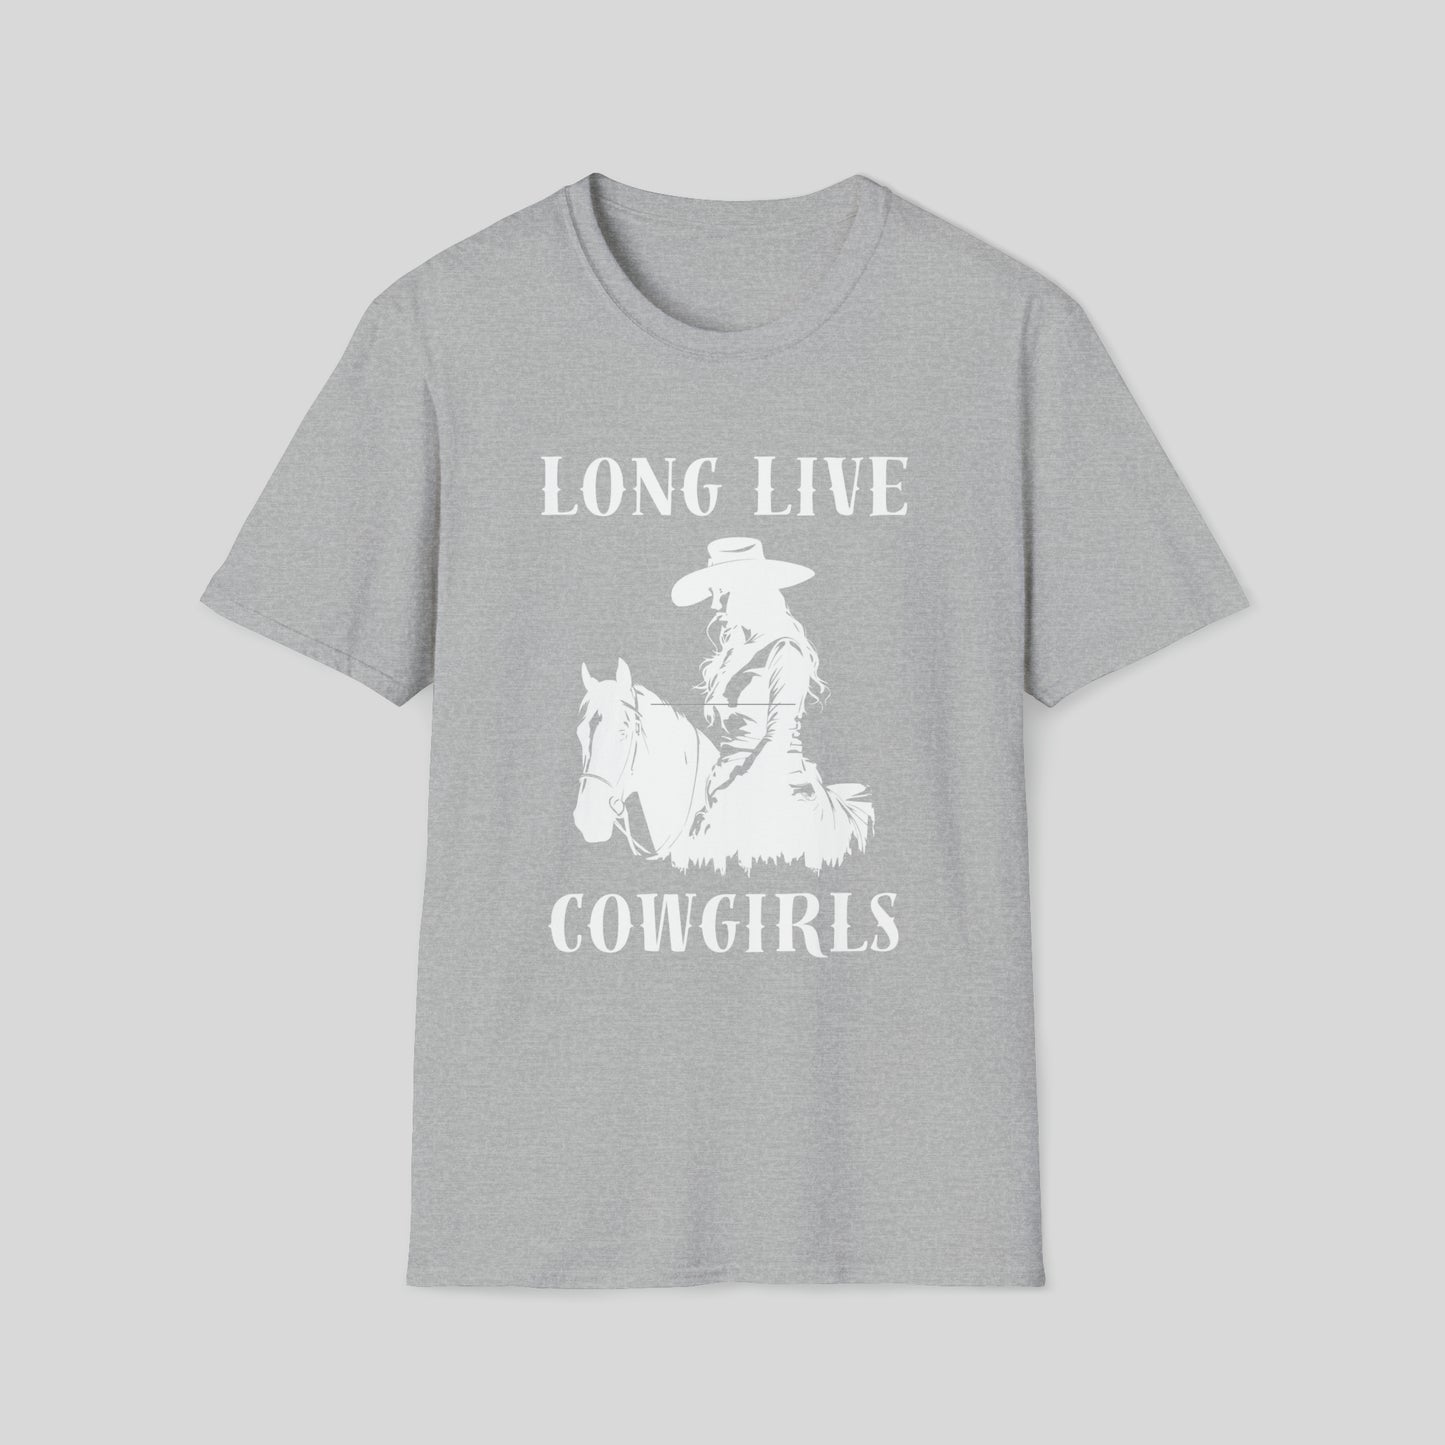 LONG LIVE COWGIRLS T-SHIRT